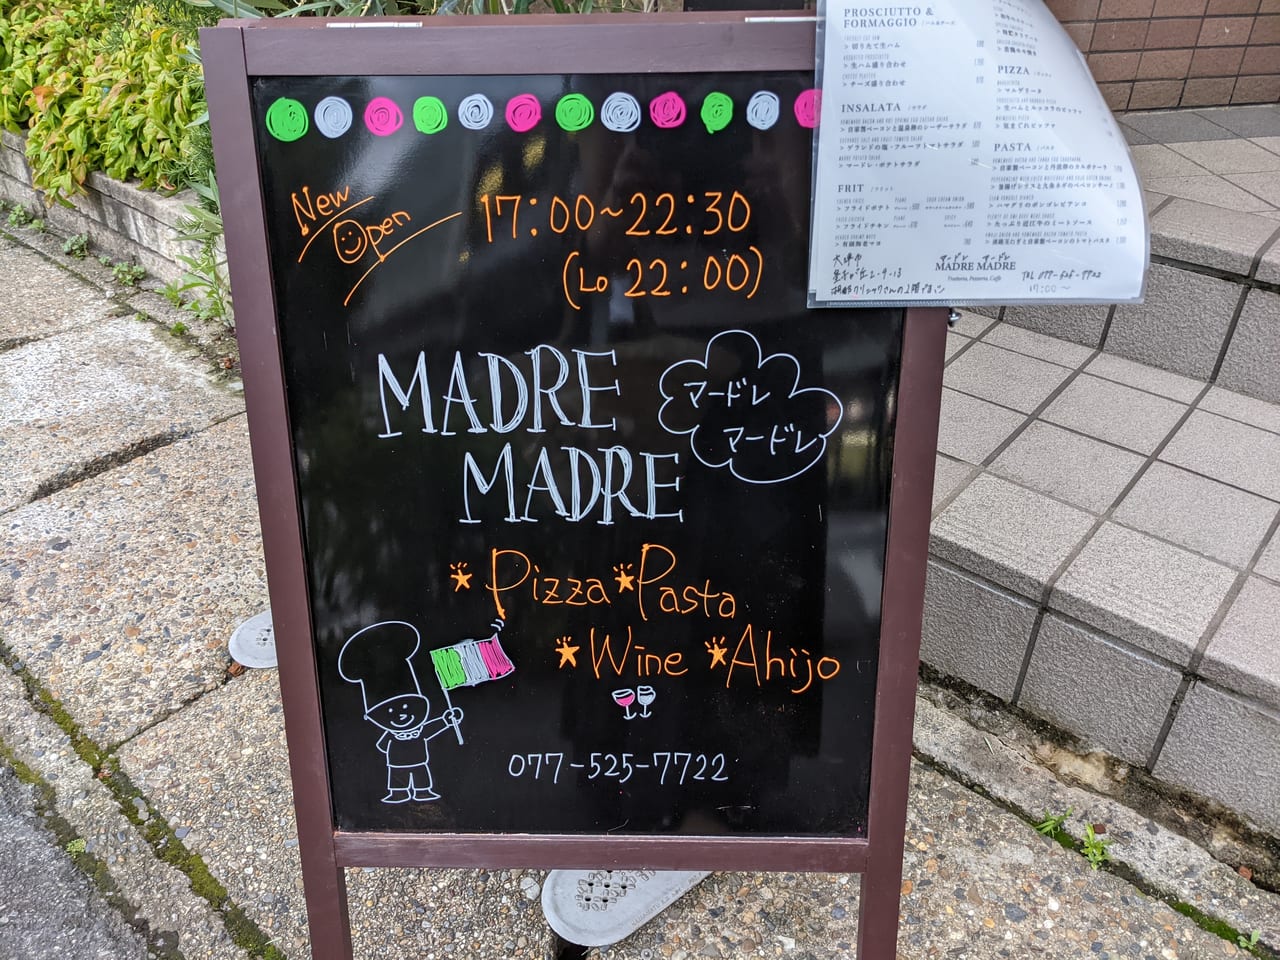 MADRE MADREがニューオープン